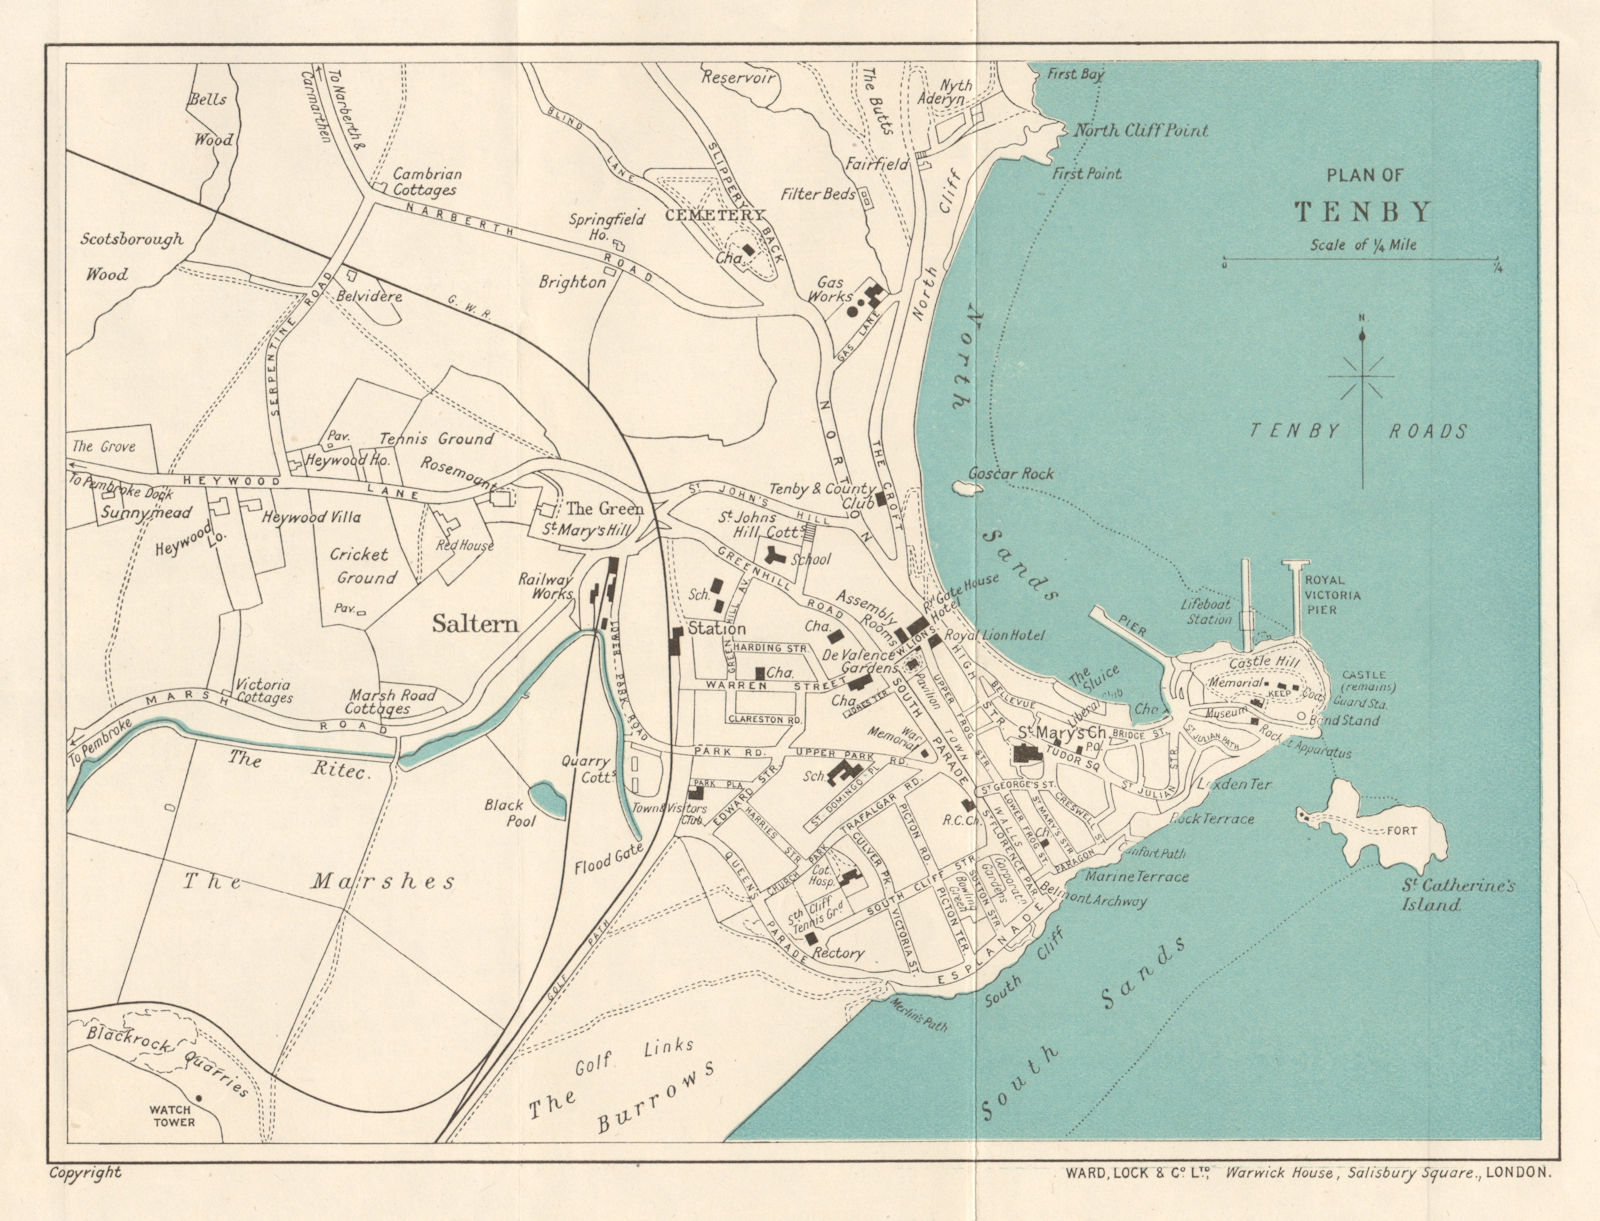 TENBY vintage tourist town city resort plan. Wales. WARD LOCK 1925 old map